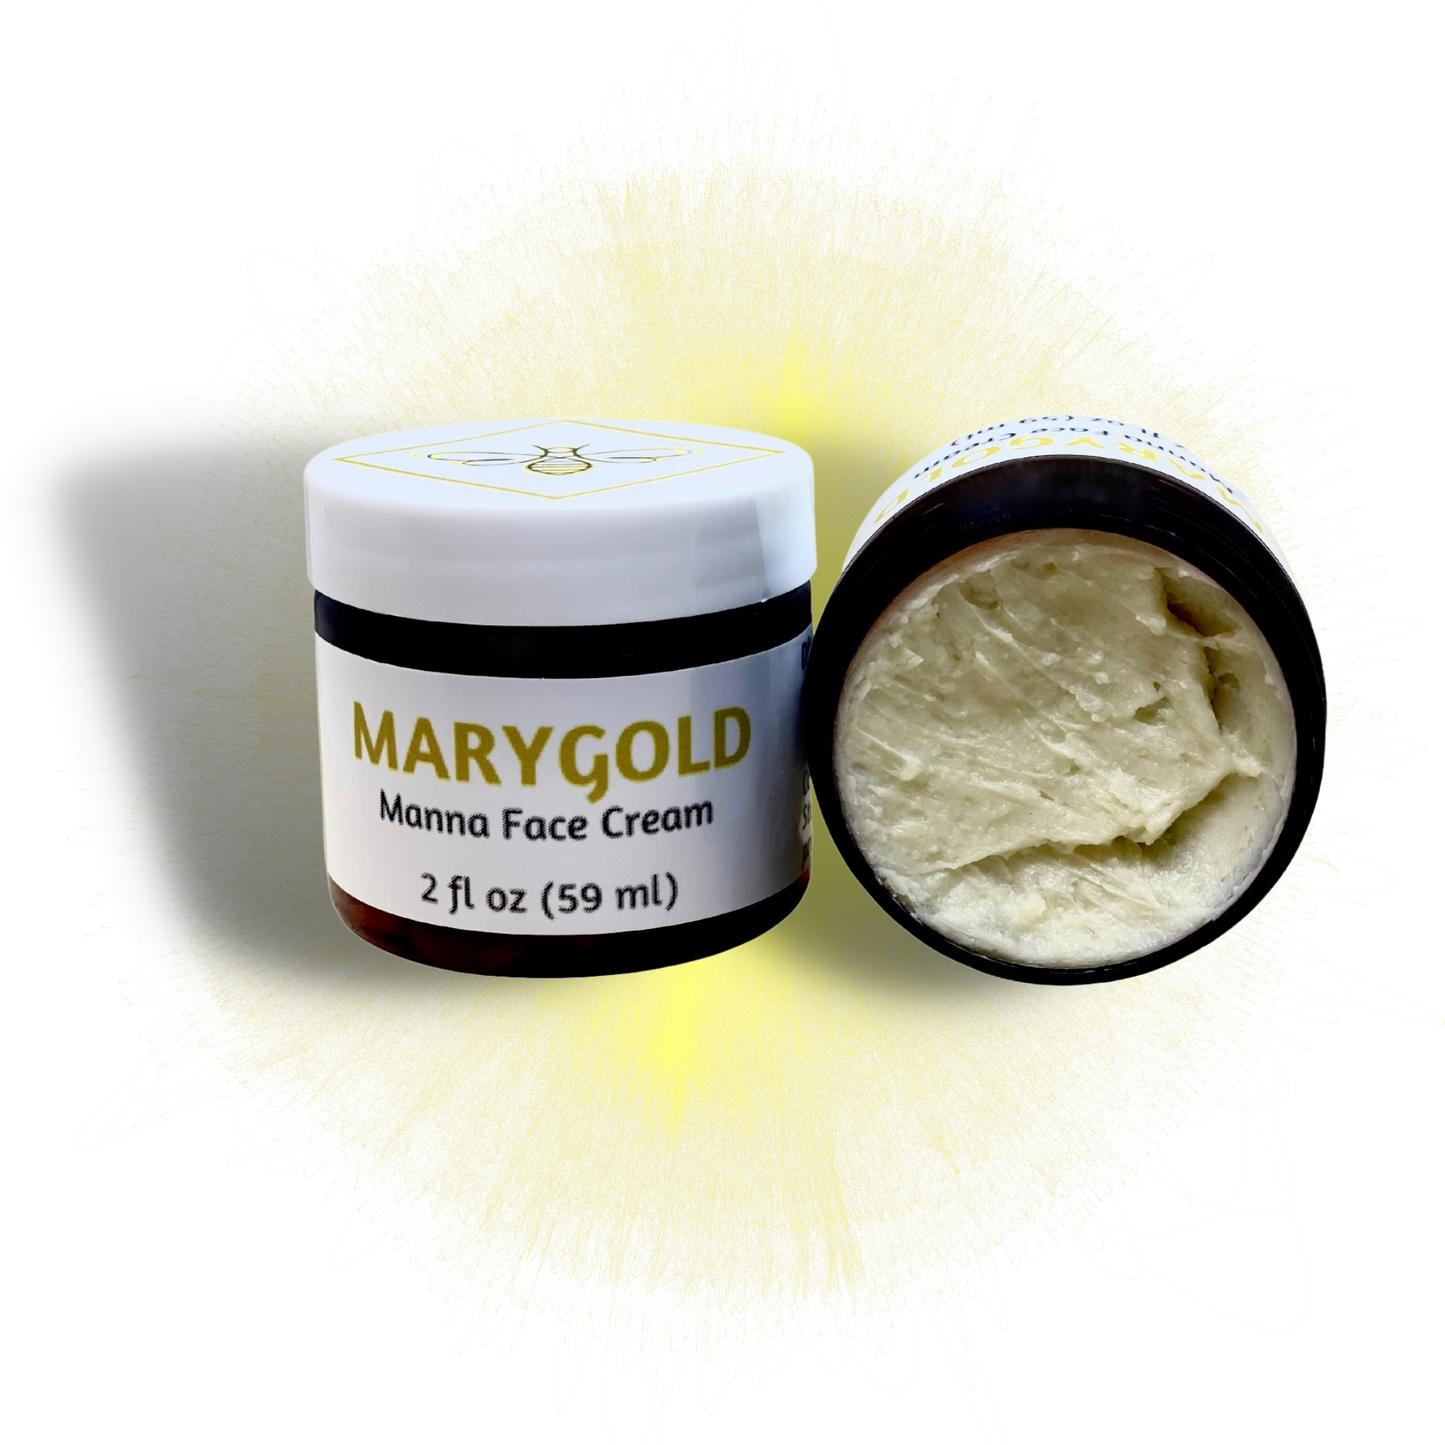 MaryGold Face Cream